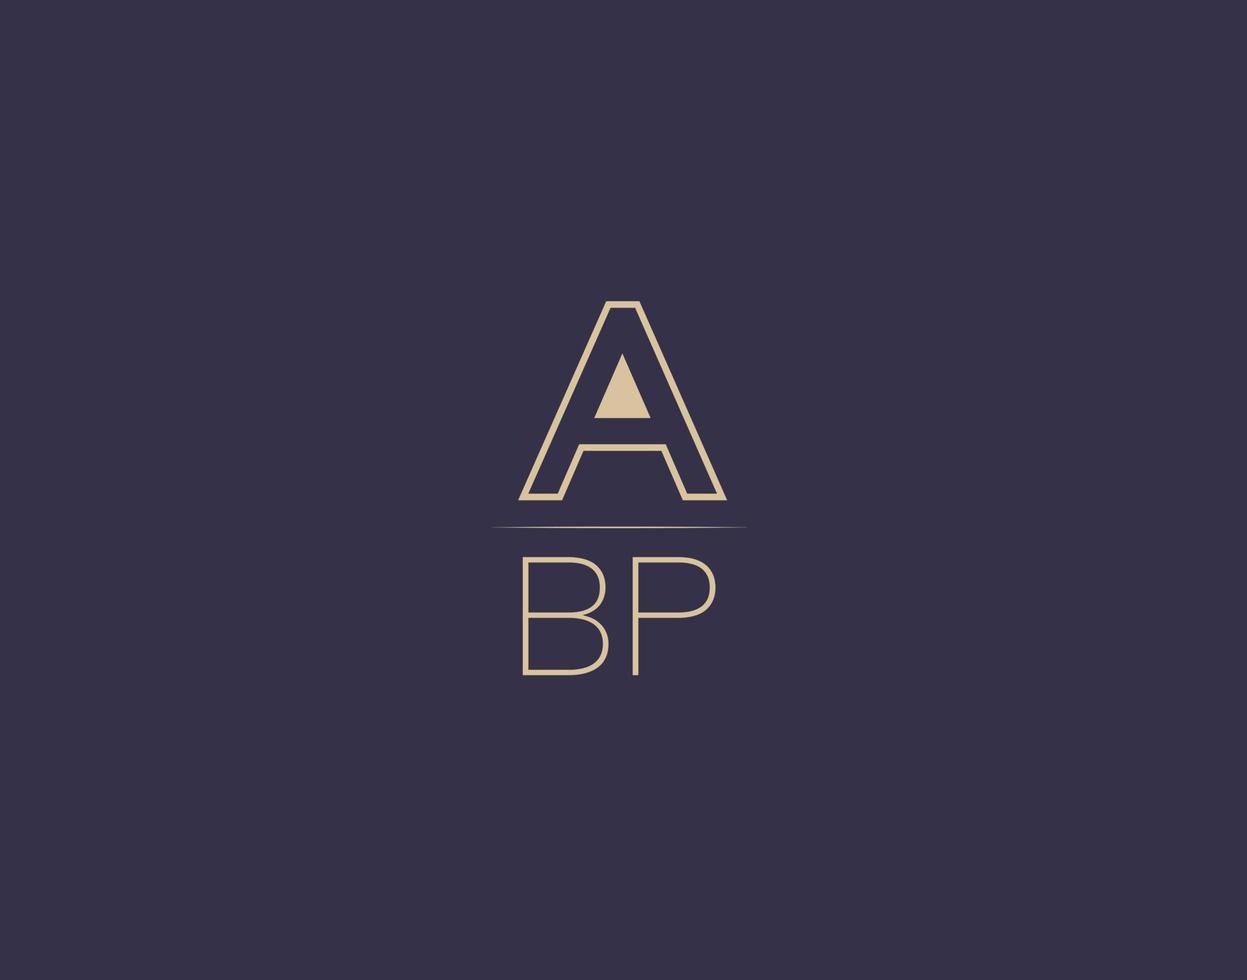 ABP letter logo design modern minimalist vector images